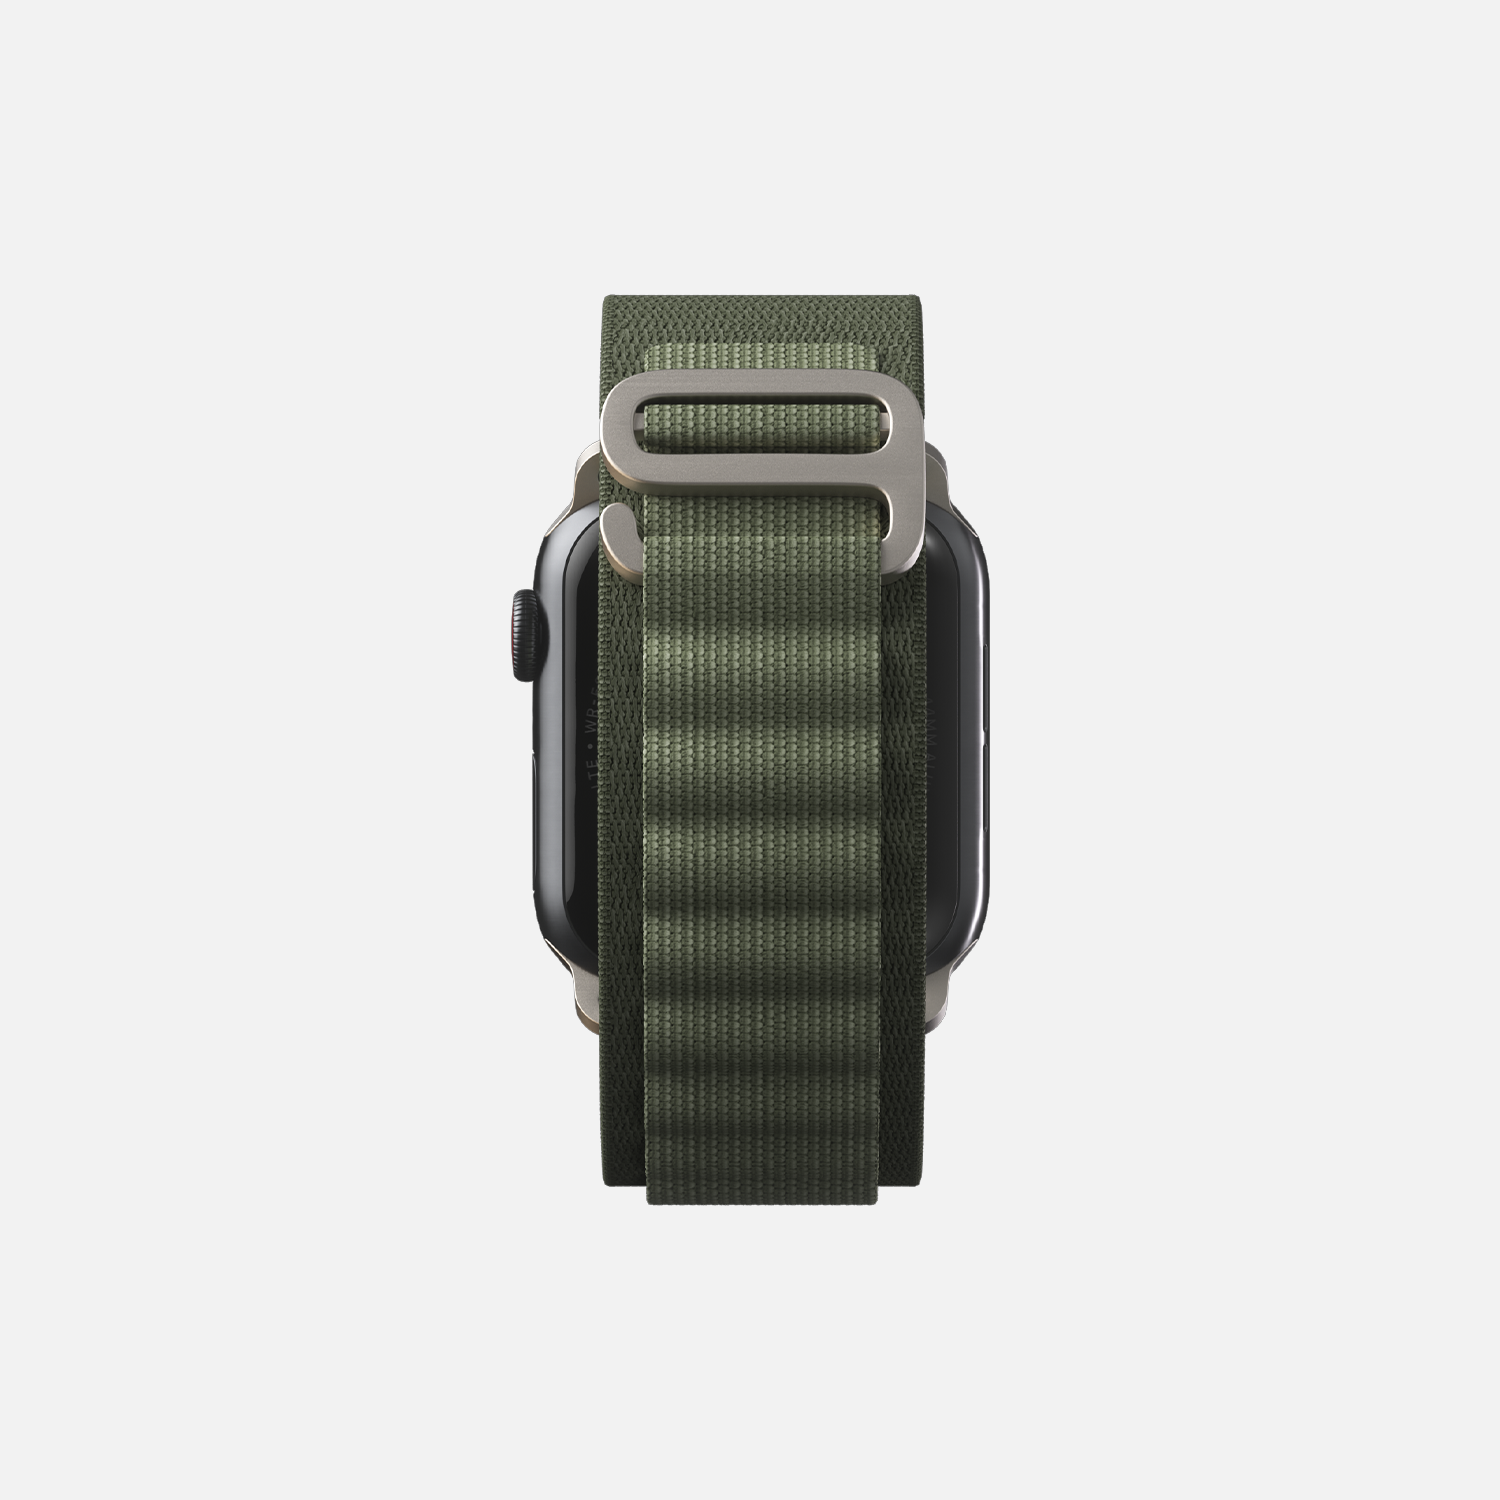 Sage green nylon band on smartwatch, sleek design, isolated on white background.